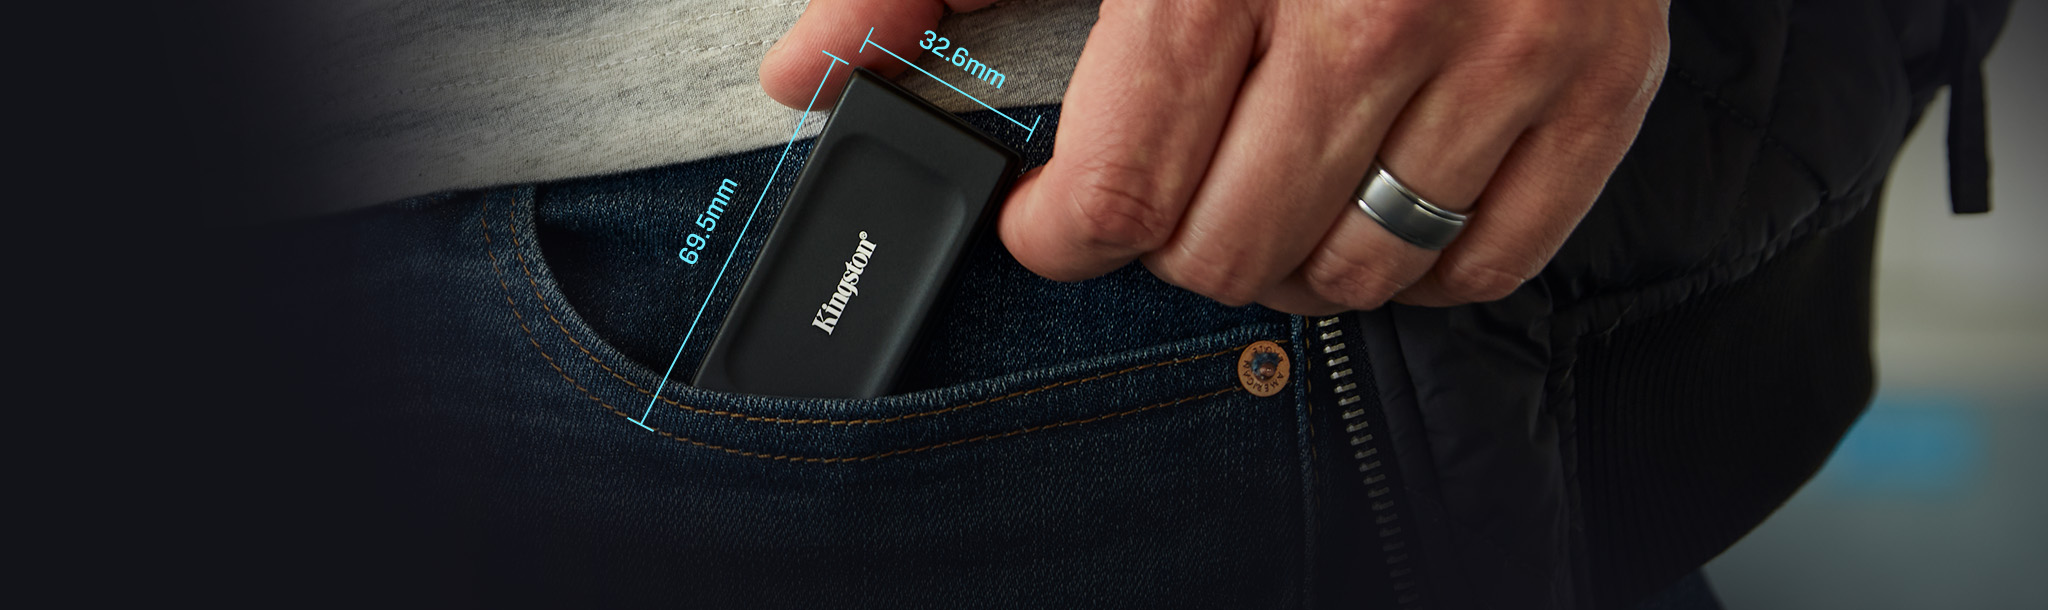 Gösterilen boyutlara sahip XS1000 taşınabilir SSD'yi tutan bir el: 69,54 x 32,58 x 13,5mm